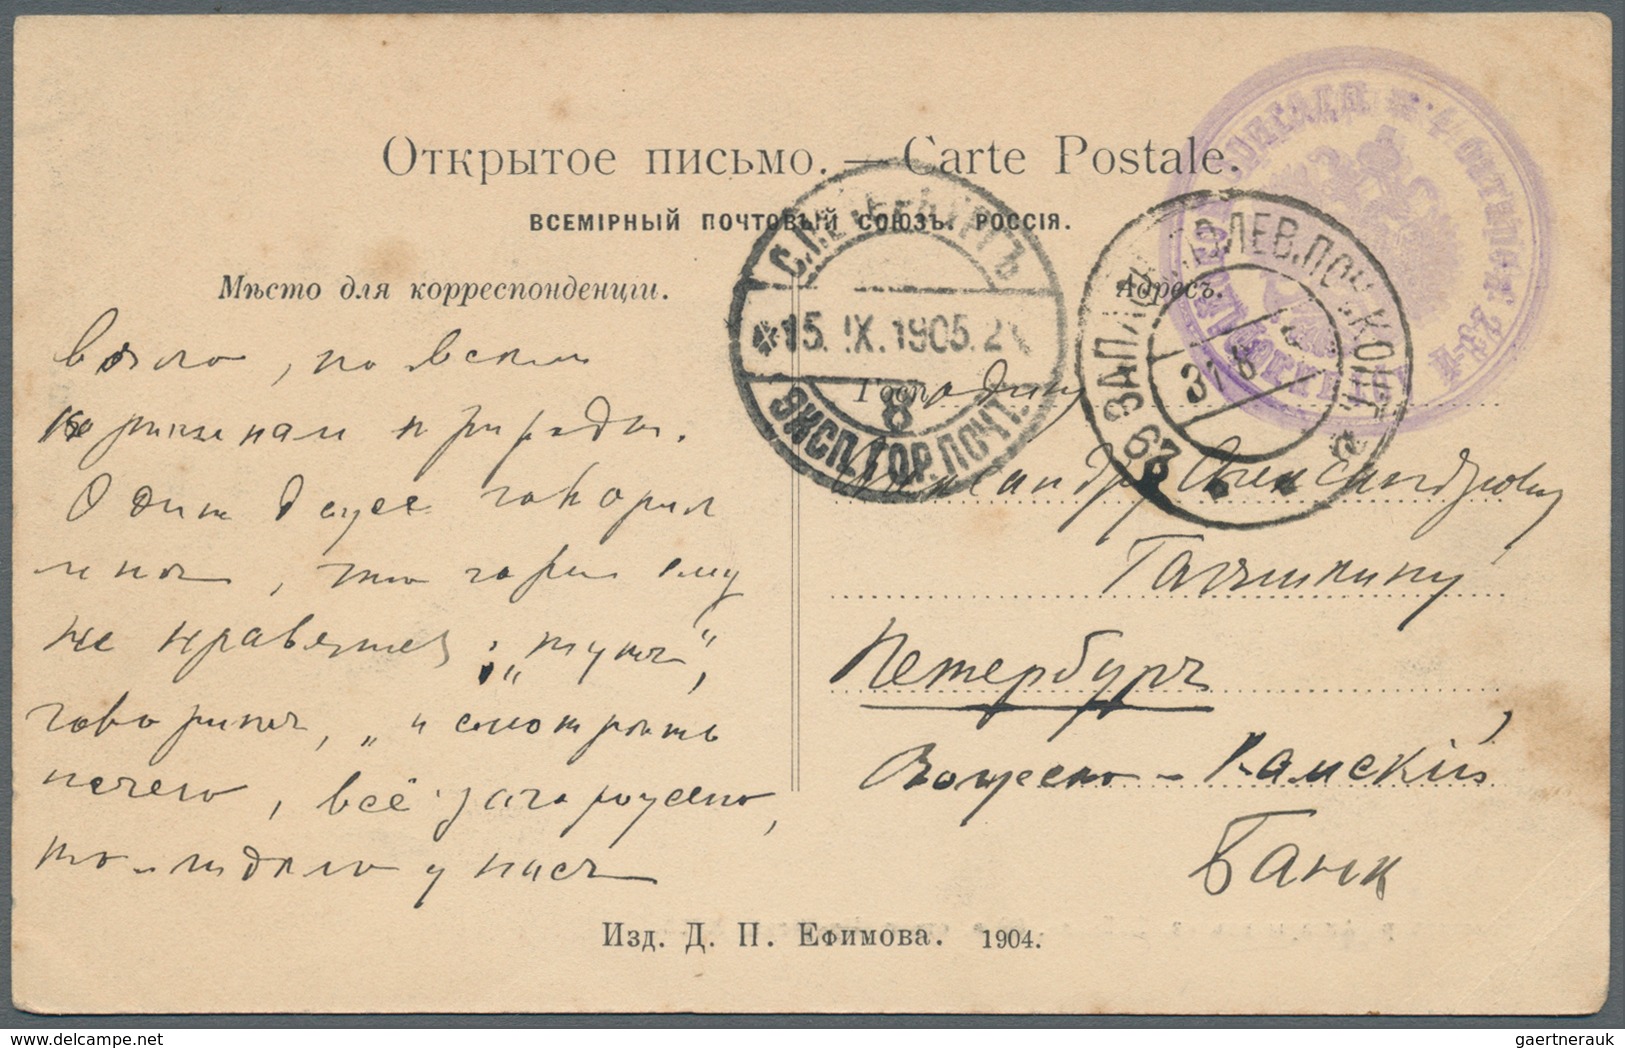 15982 Russland - Militärpost / Feldpost: 1904/05, Russo-Japanese war, ppc used as field post cards (6) inc